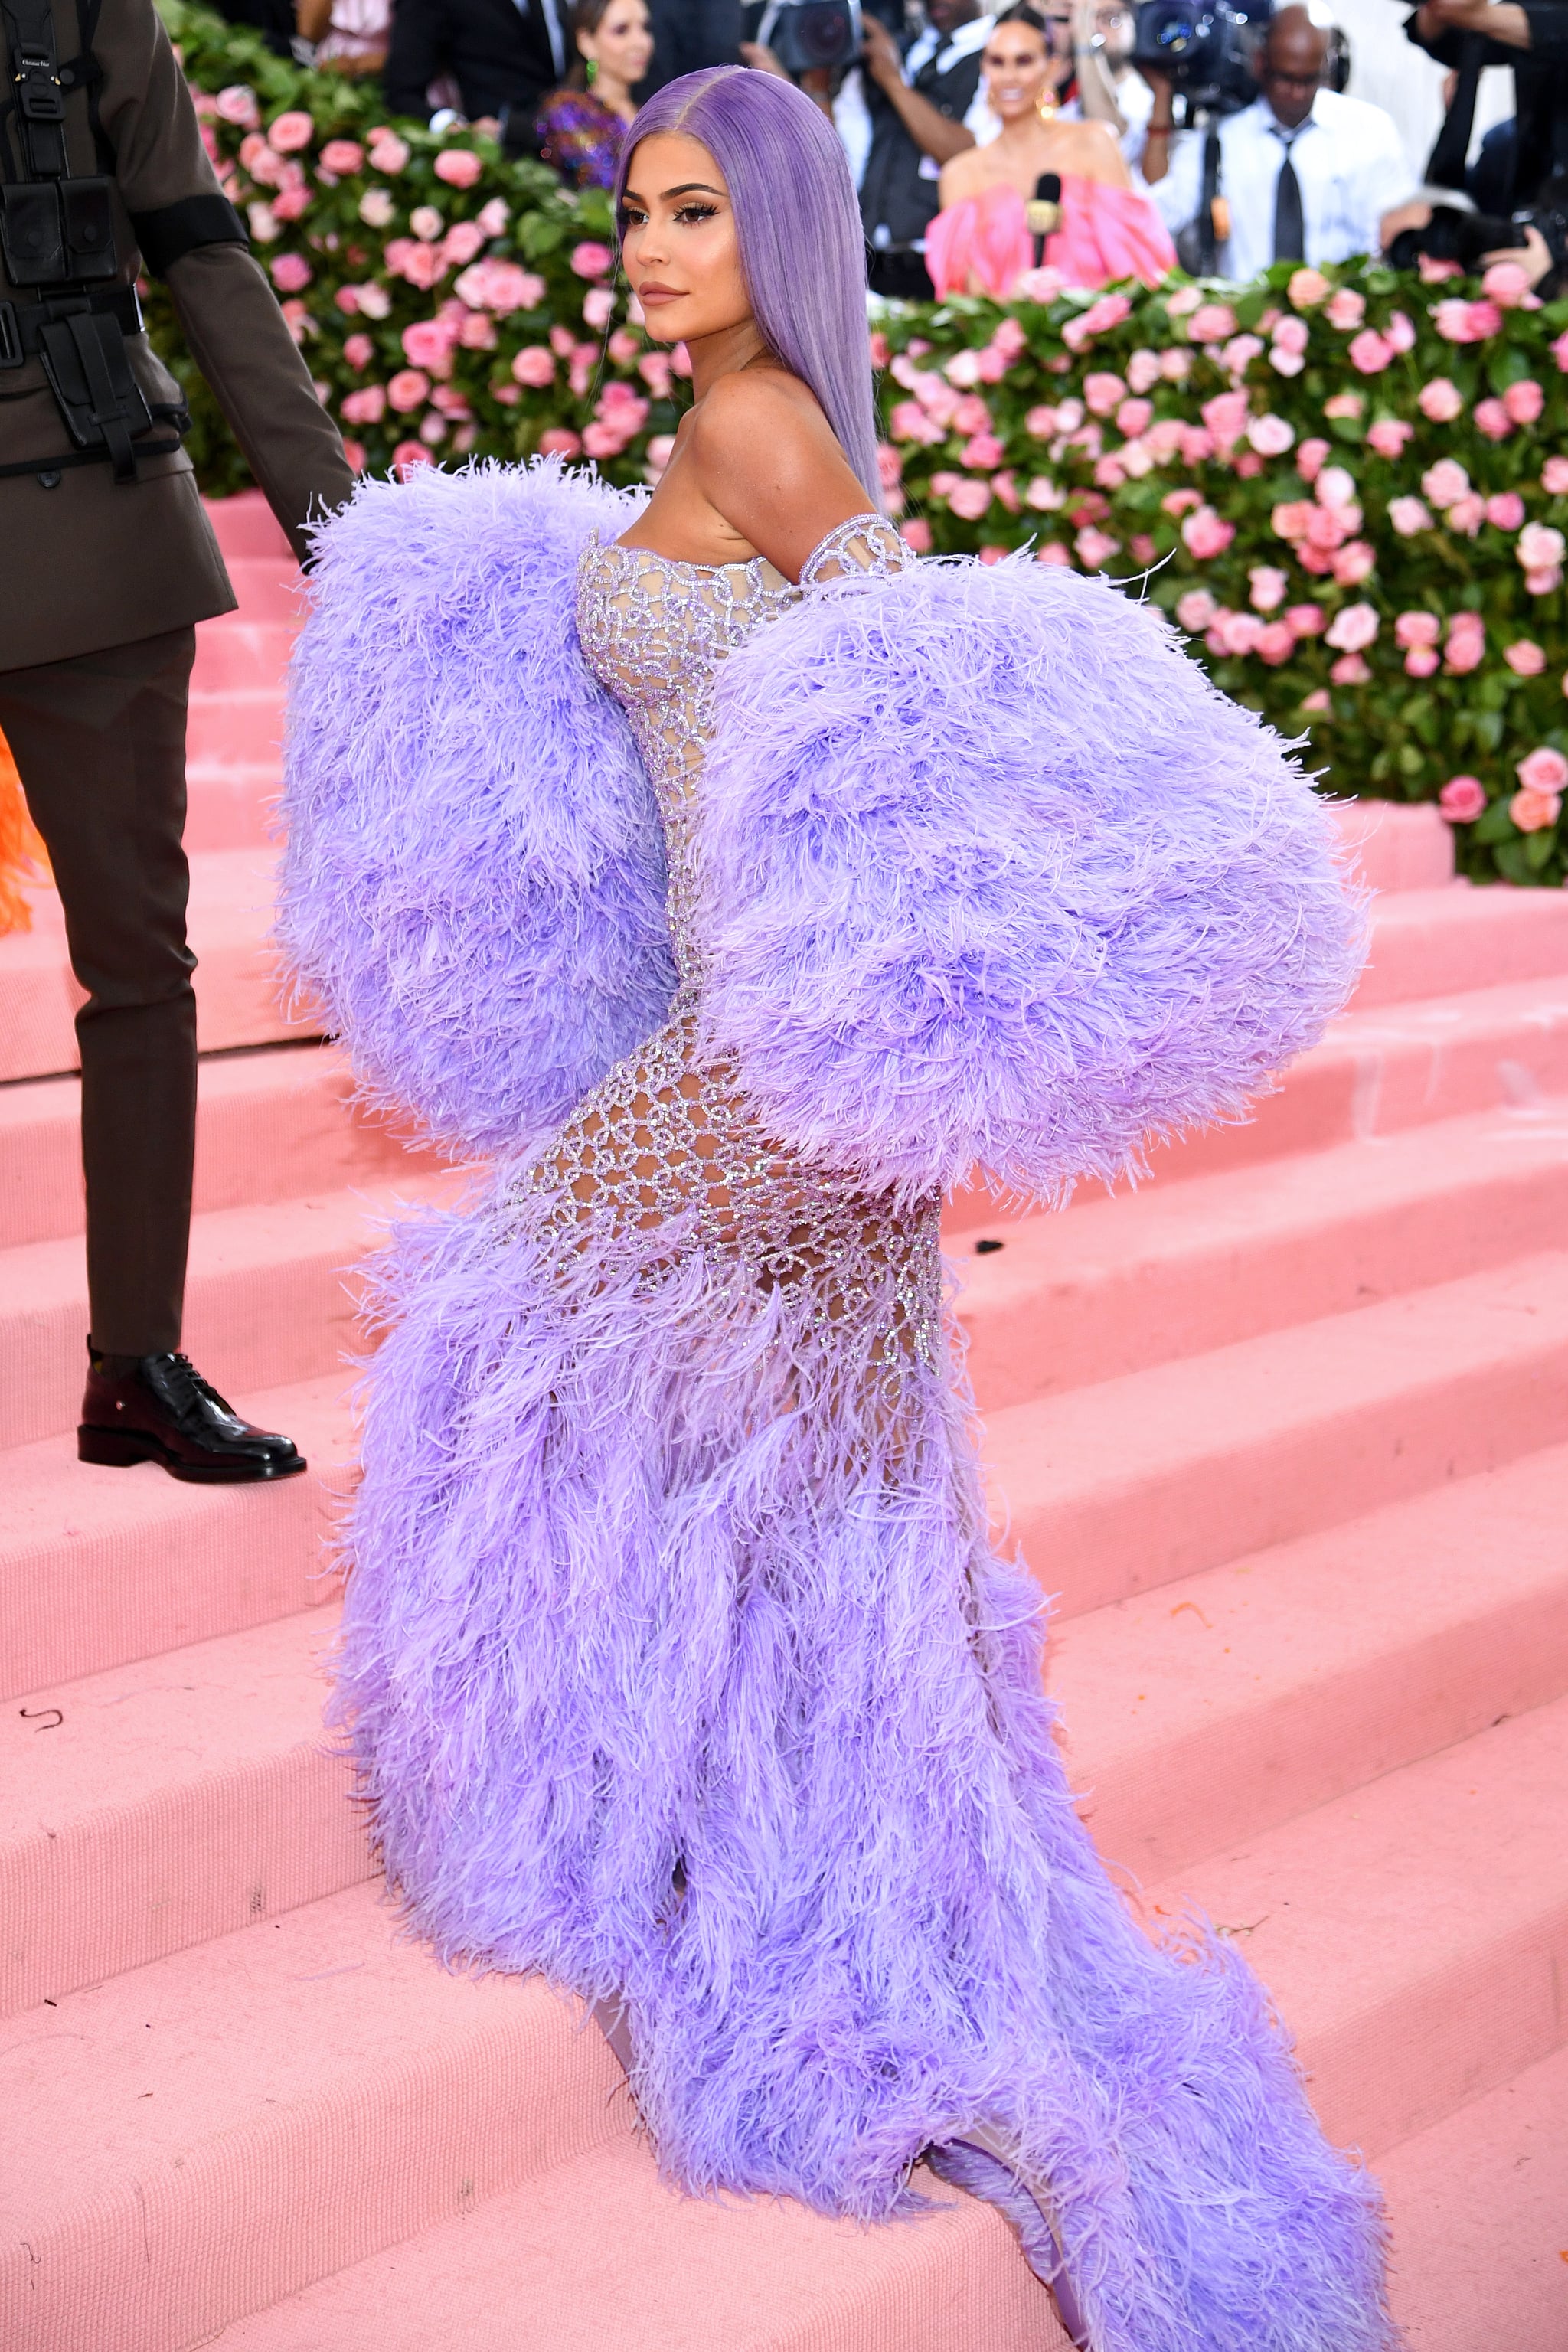 Kylie Jenner, Lavender Dress, Strapless, Versace Dress